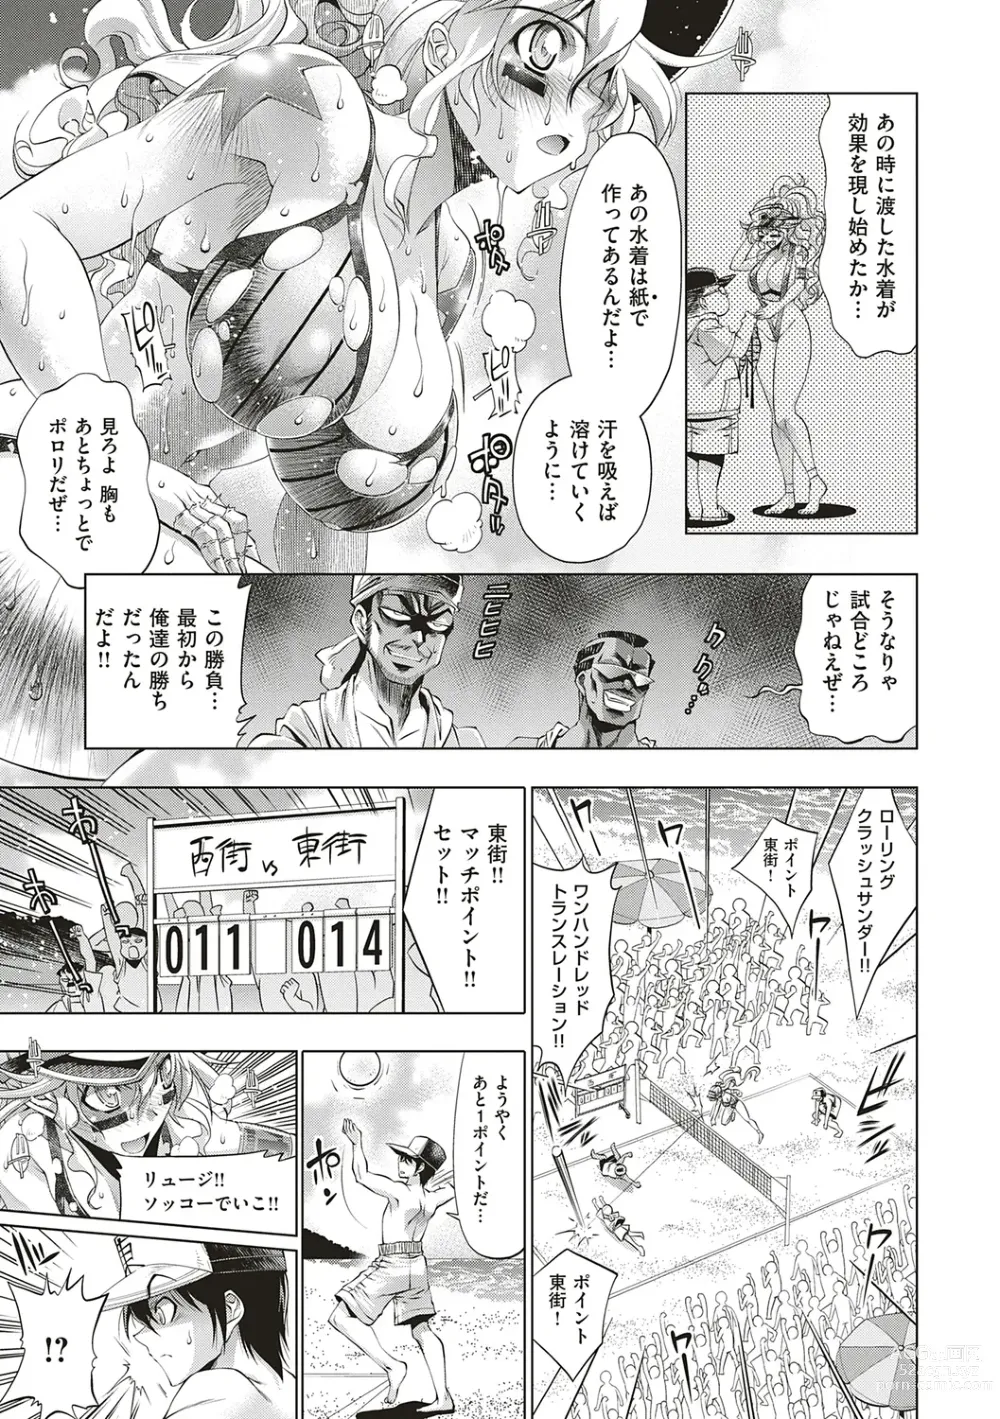 Page 323 of manga Suketto Sanjou!!